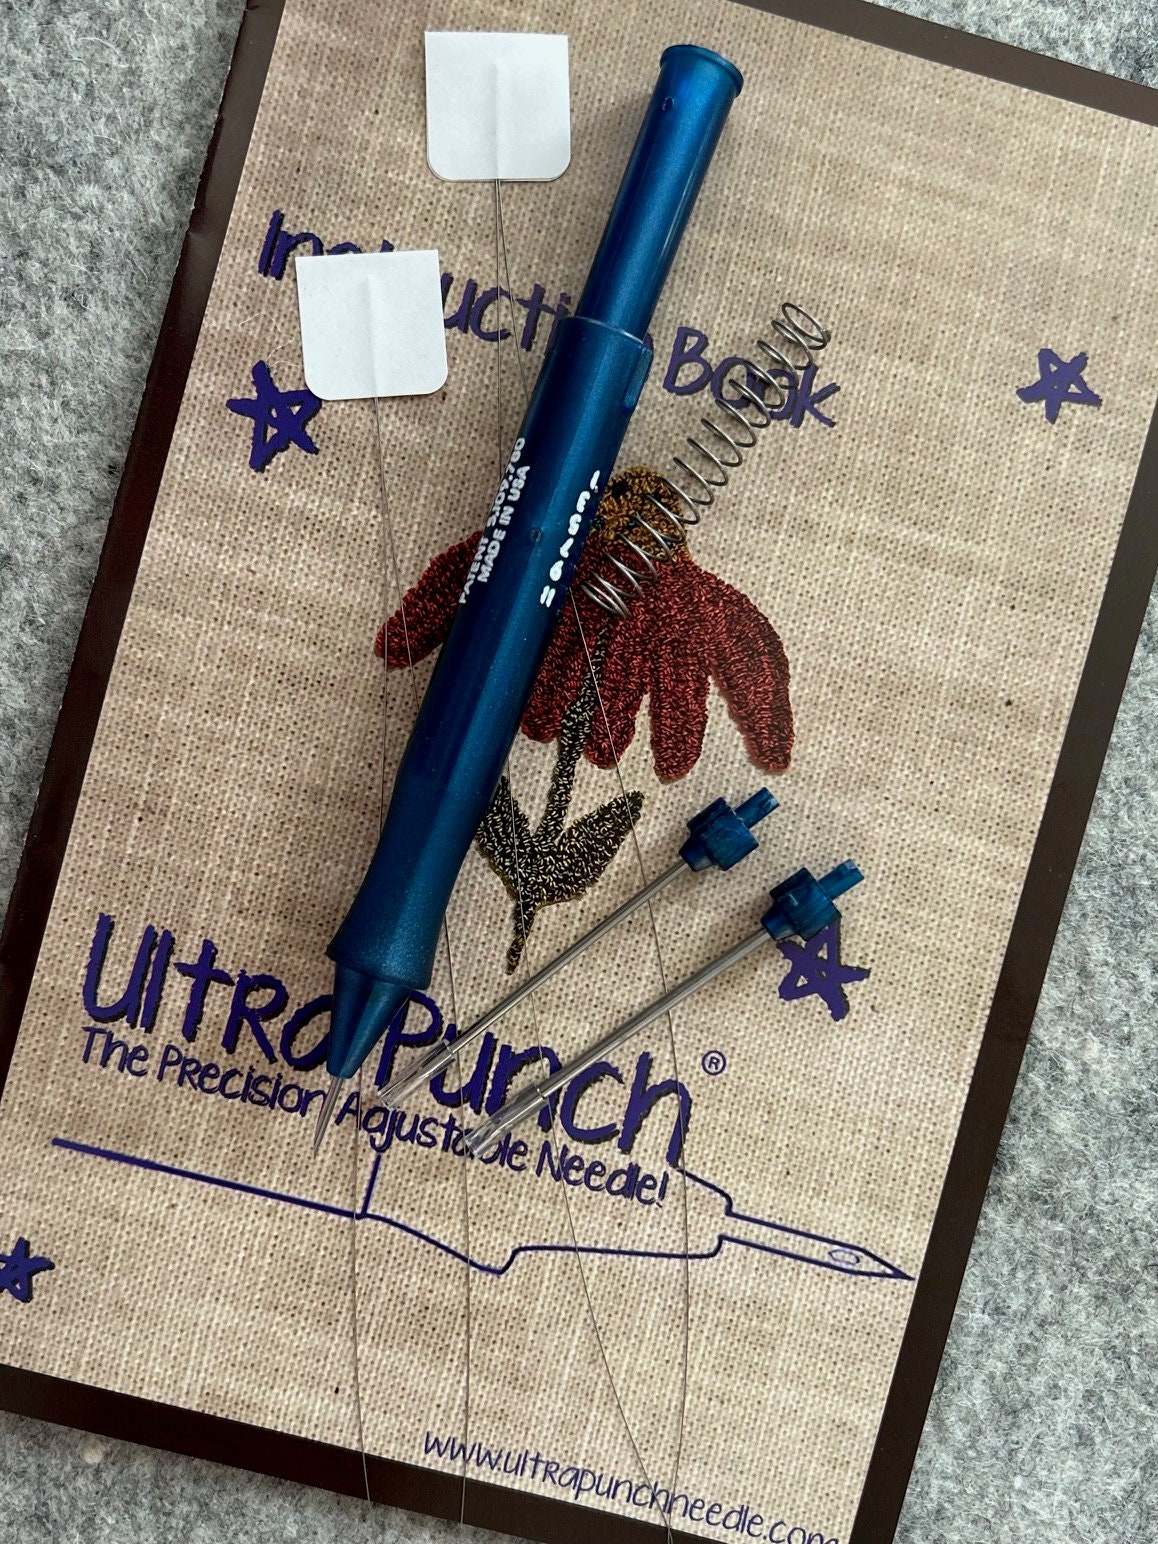 Ultra Punch Punch Needle Embroidery Needle Set - 034722927260